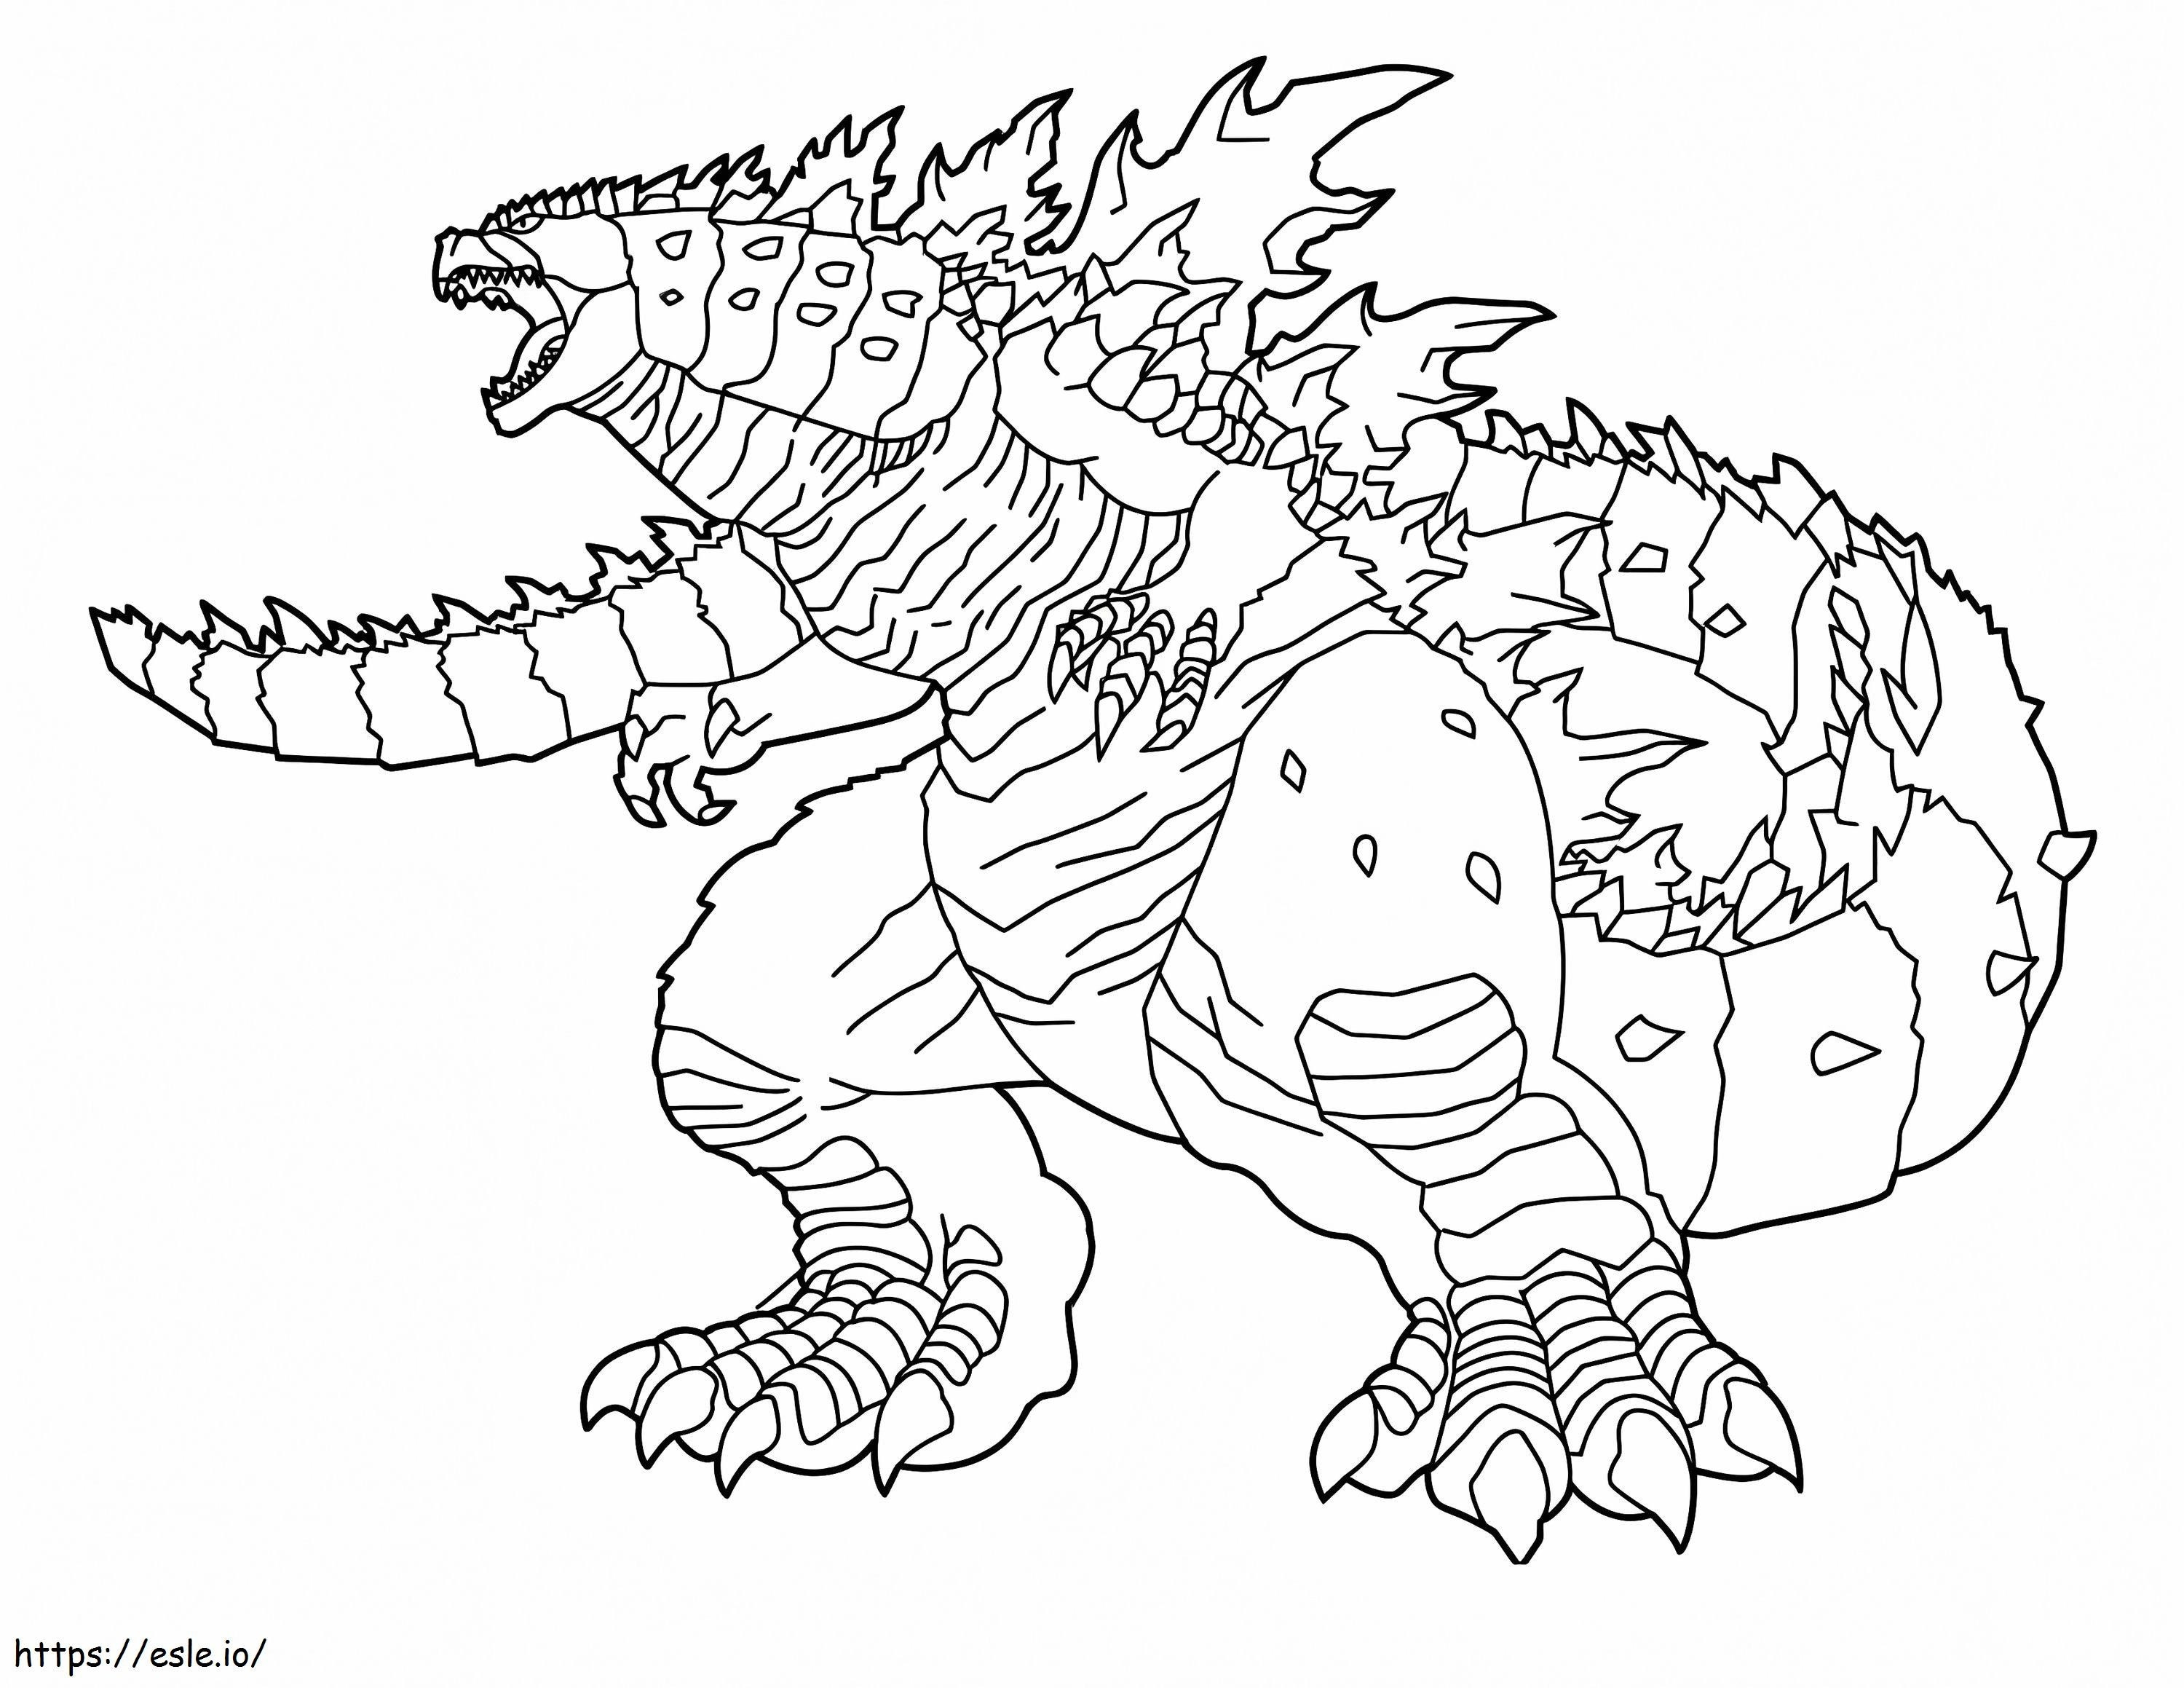 Dev Godzilla boyama